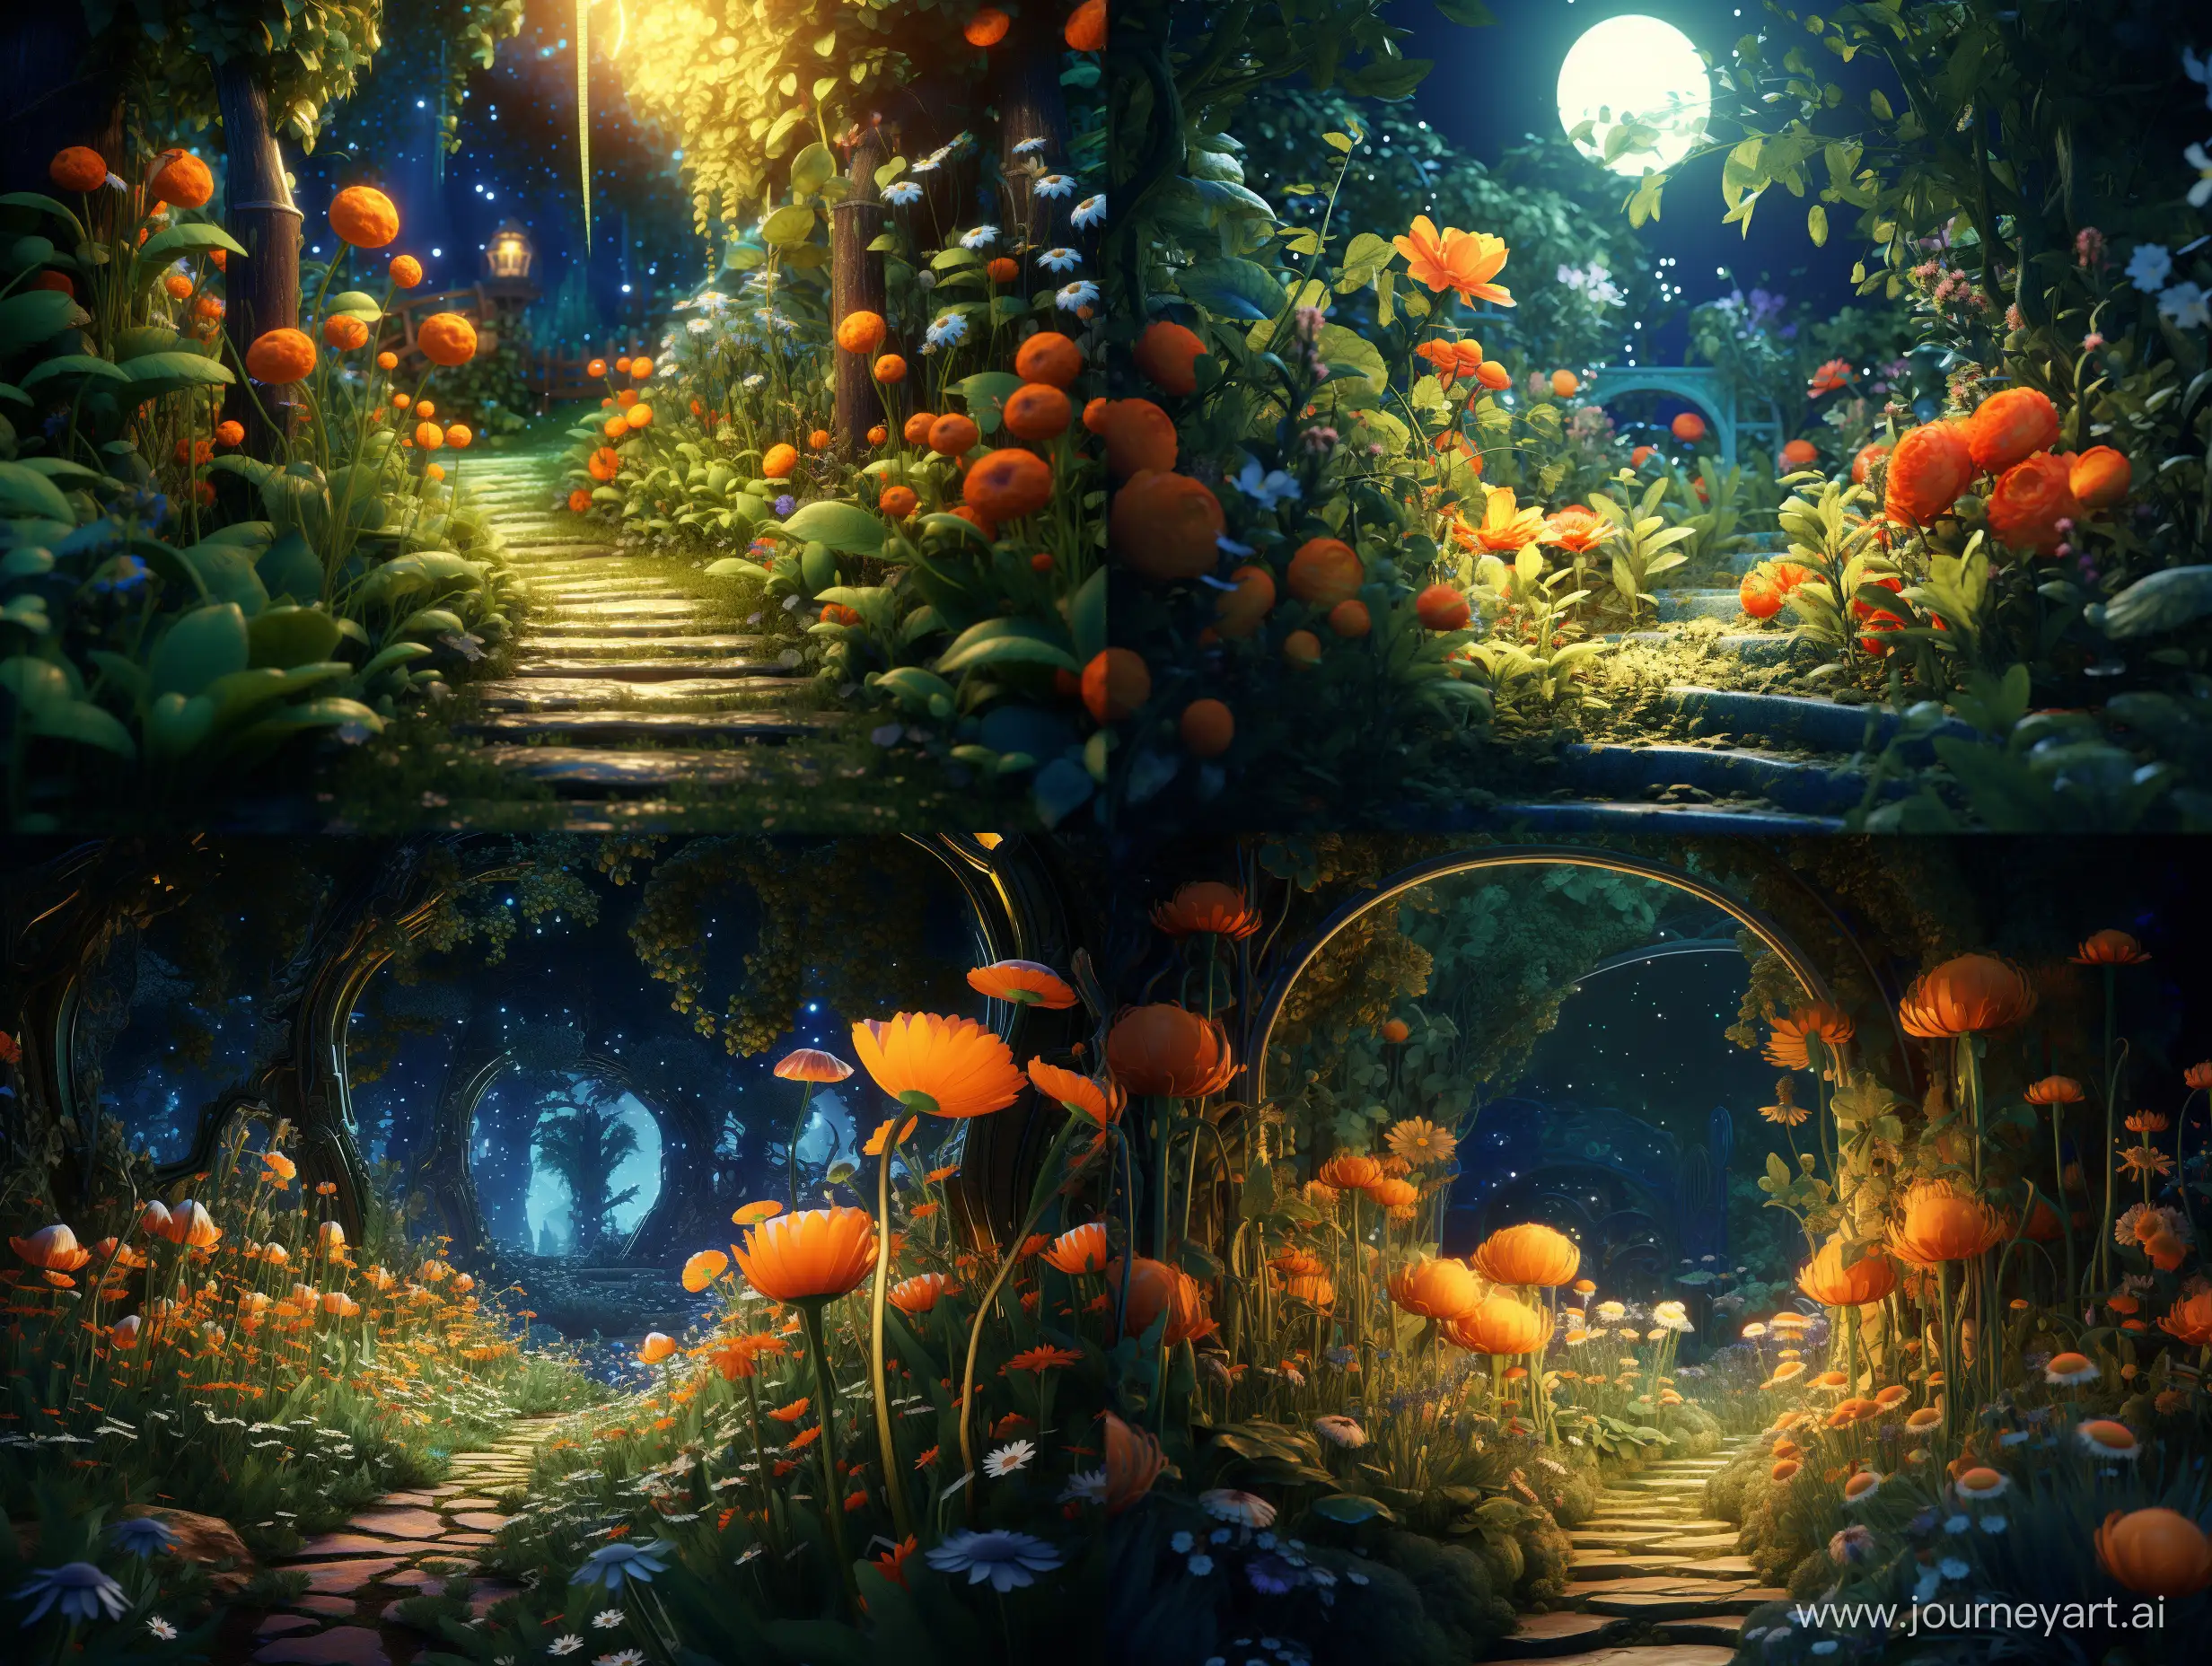 Vibrant-Orange-Garden-Illuminated-by-Blue-and-Greenish-Light-in-Stunning-4K-Detail